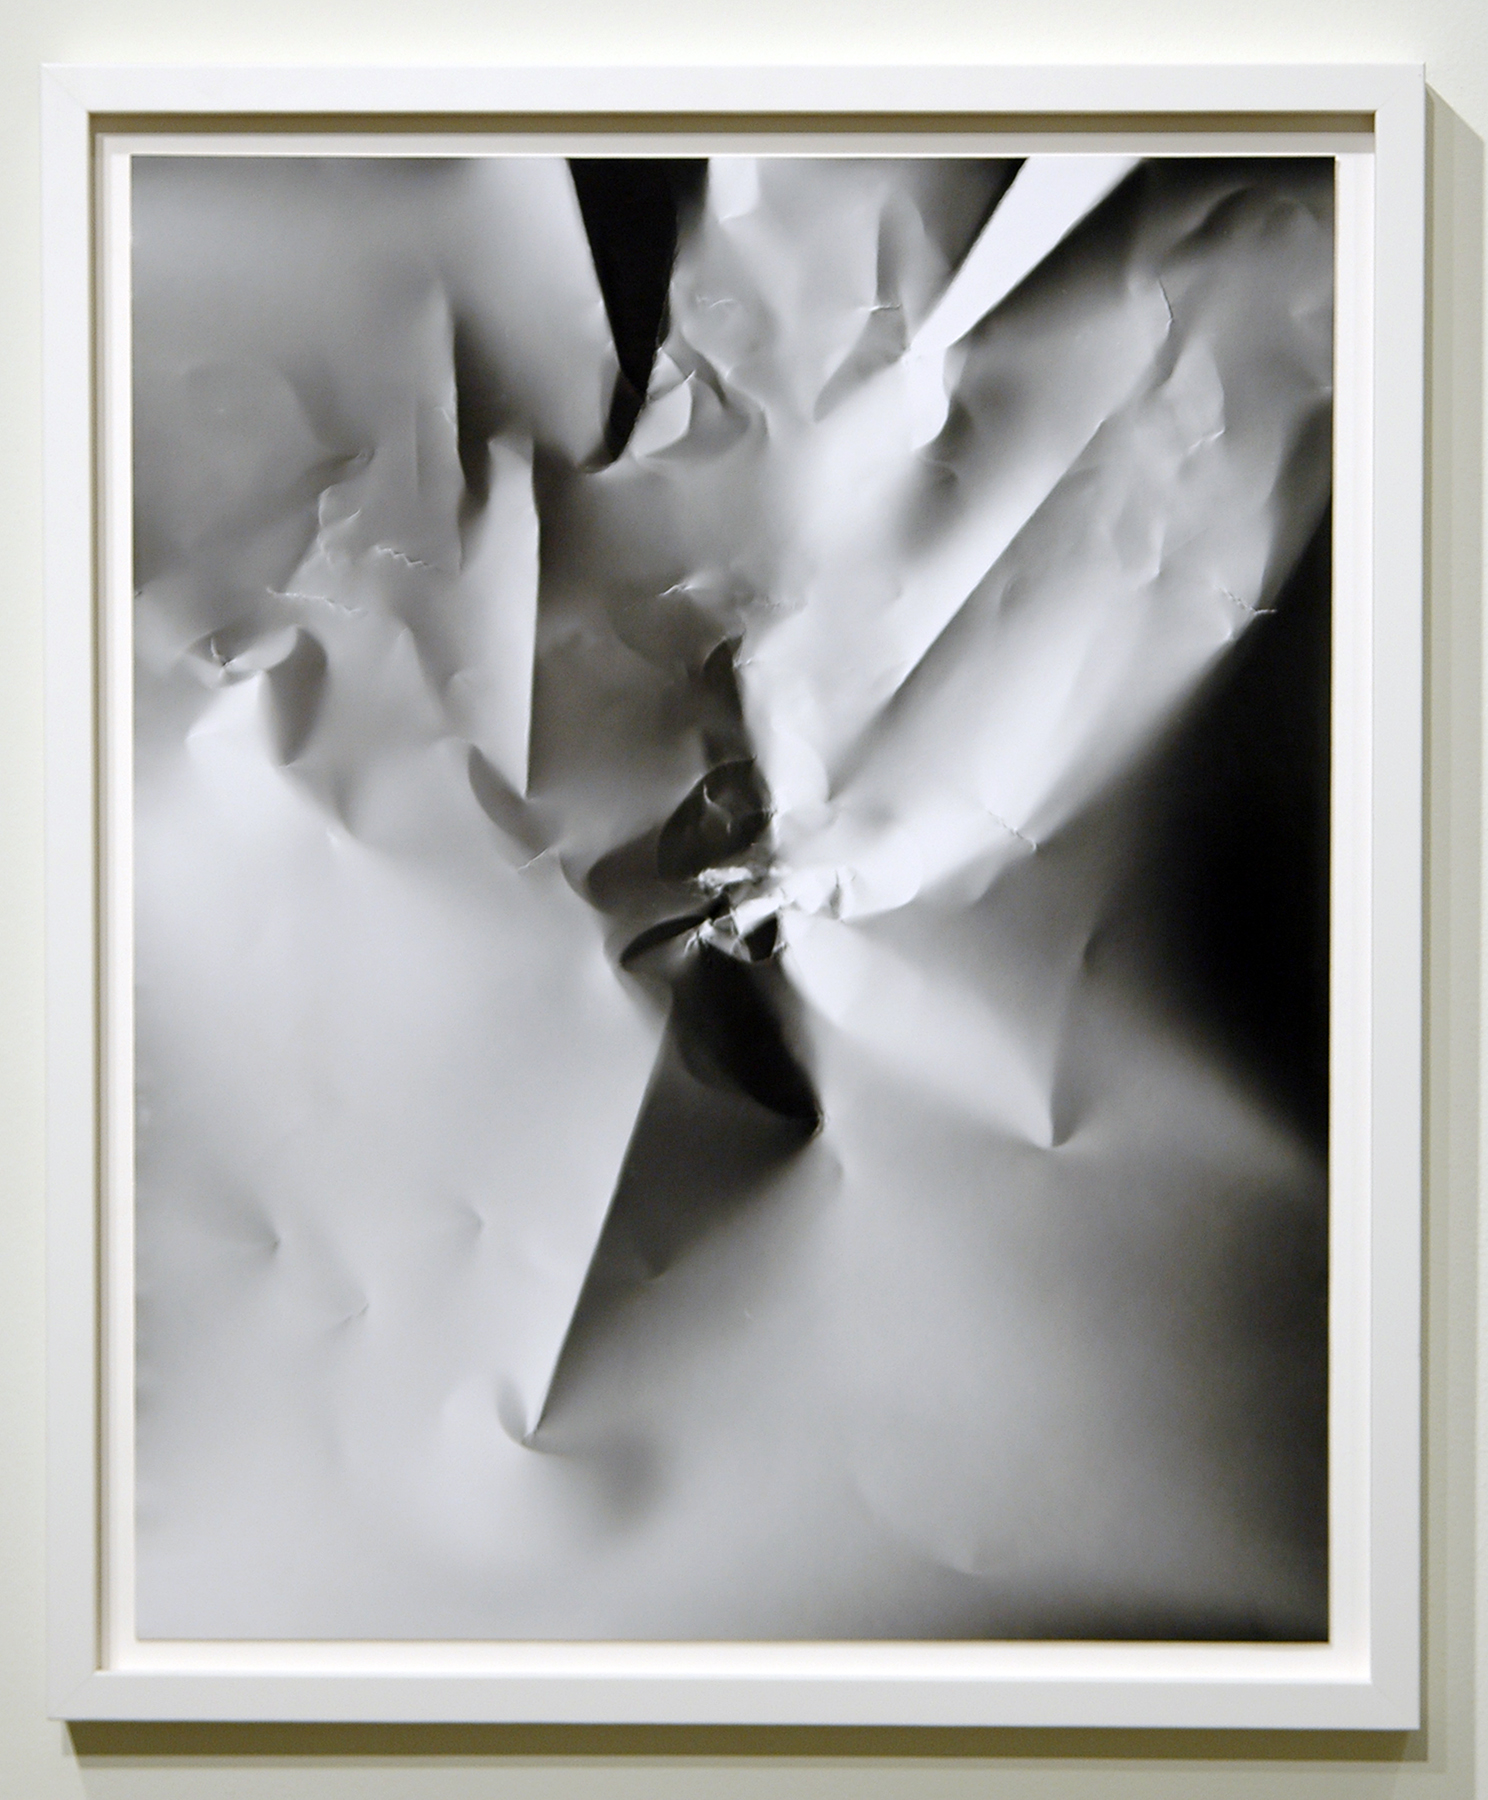   WITH CINDER BLOCKS WE FLATTEN OUR PHOTOGRAPHS  C. Wright Daniel,&nbsp; Untitled (Profile Portrait) , unique silver gelatin print, 26.5" x 22", 2013 